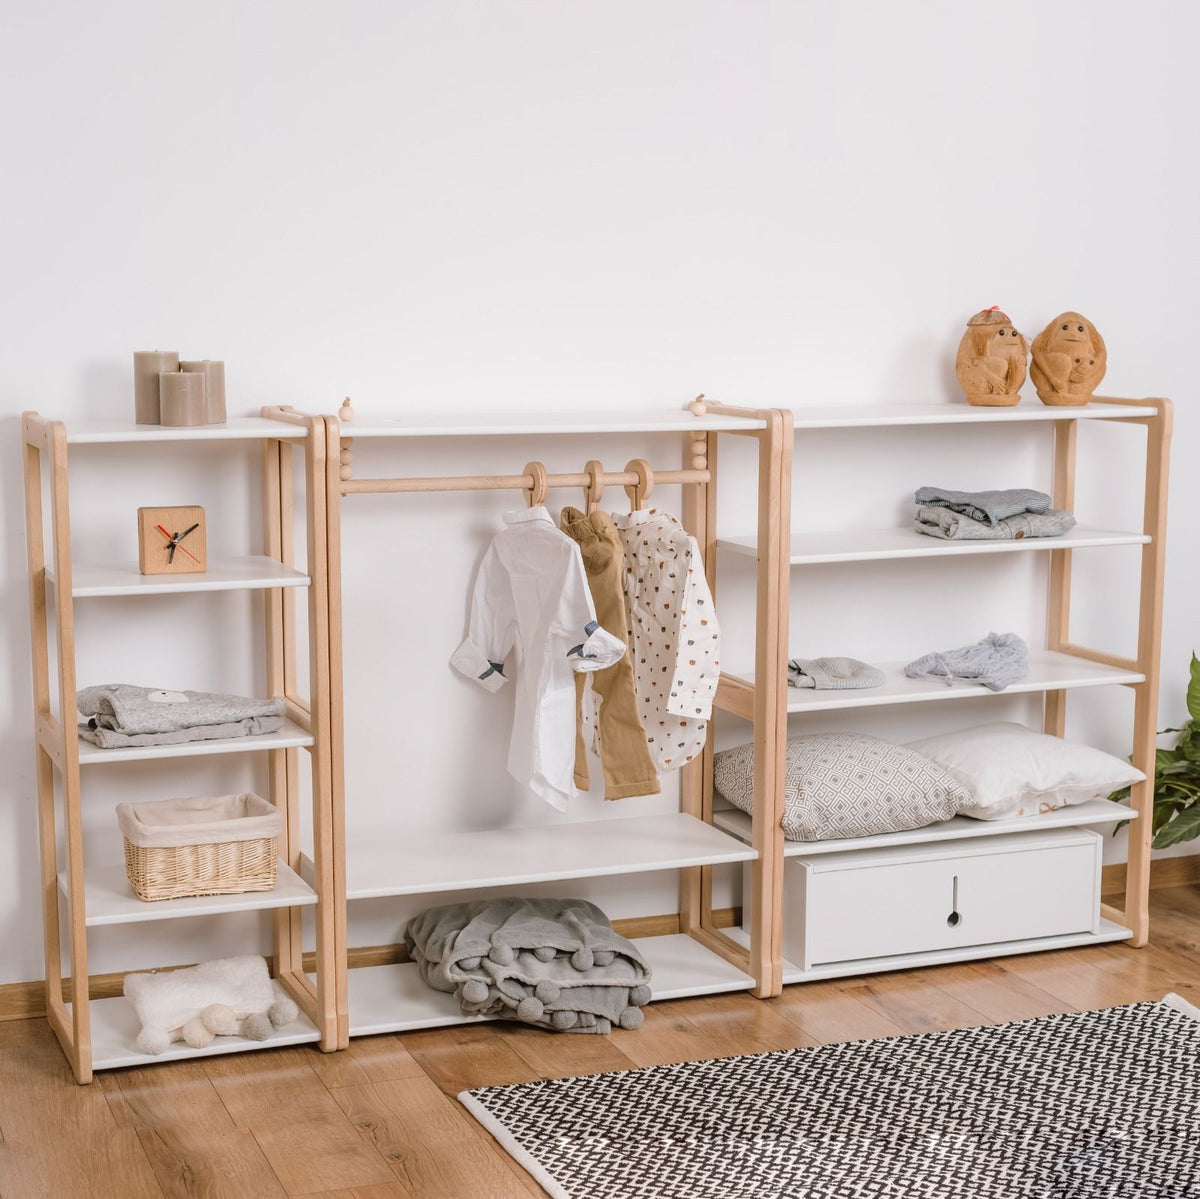 Wardrobe with shelf + 2 maxi shelves - Montessori®